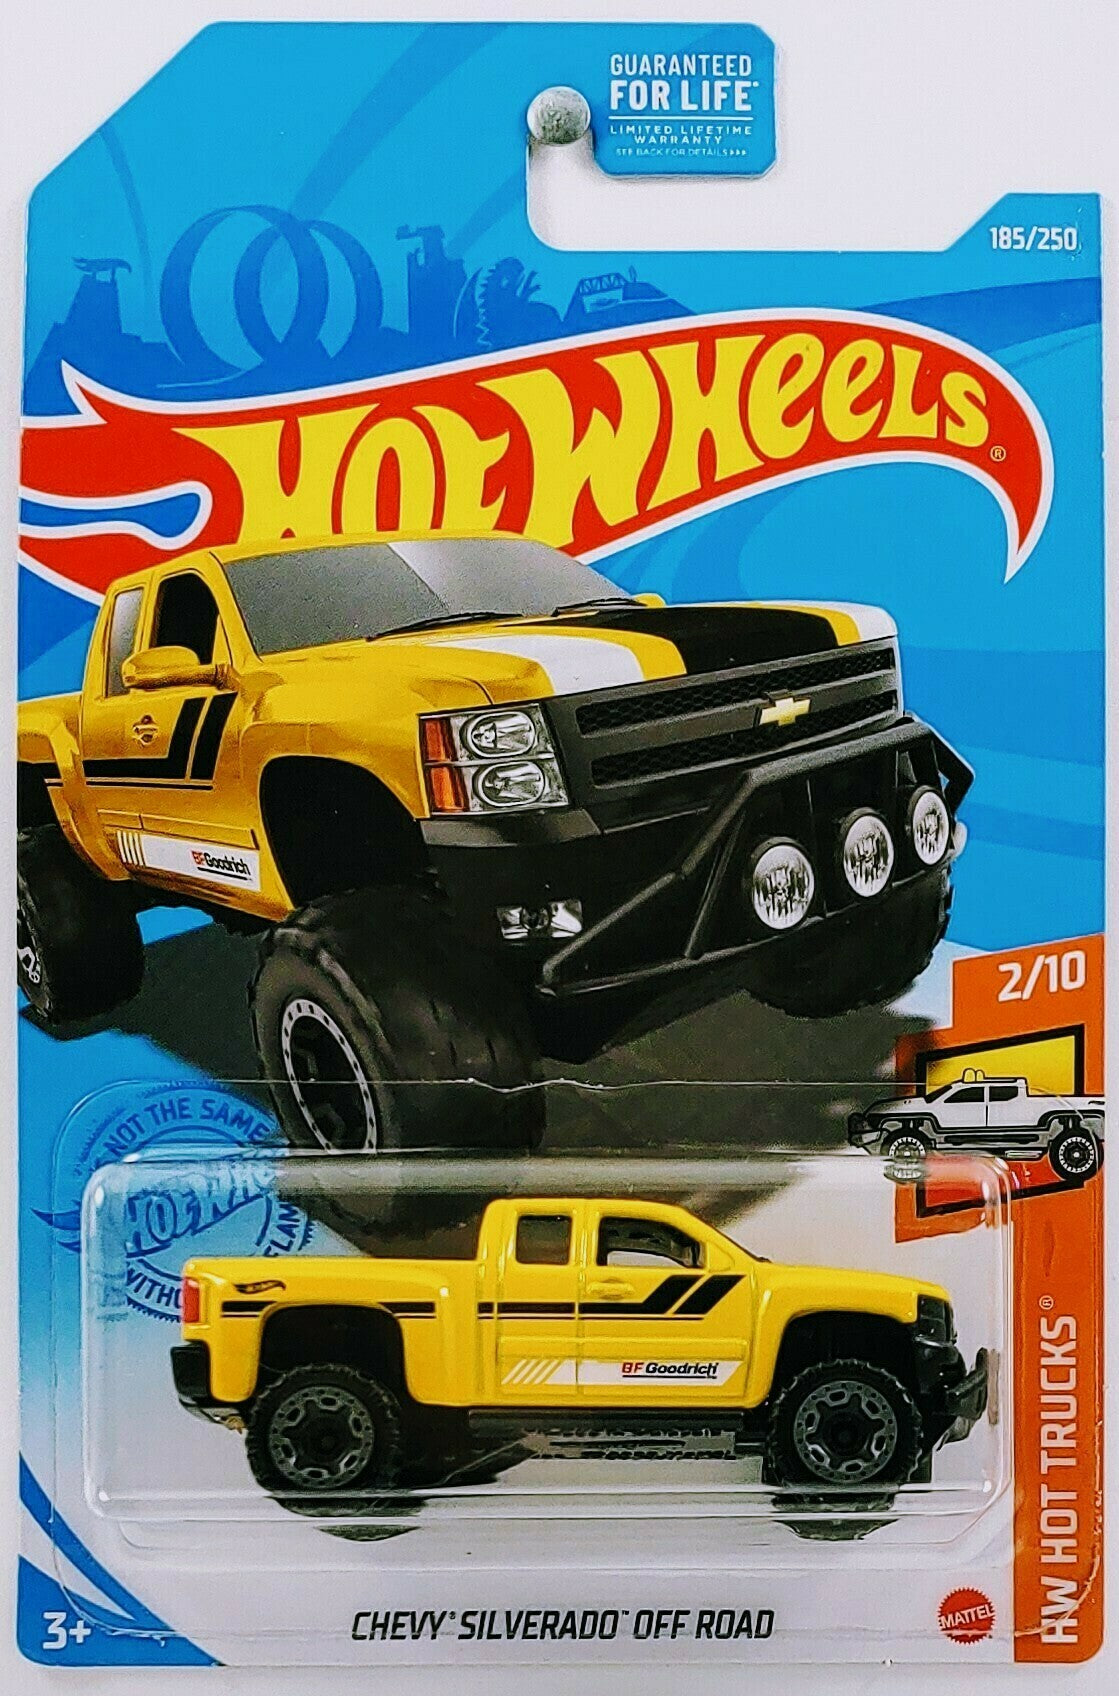 Hot Wheels 2021 - Collector # 185/250 - HW Hot Trucks 2/10 - Chevy Silverado Off Road - Yellow - USA